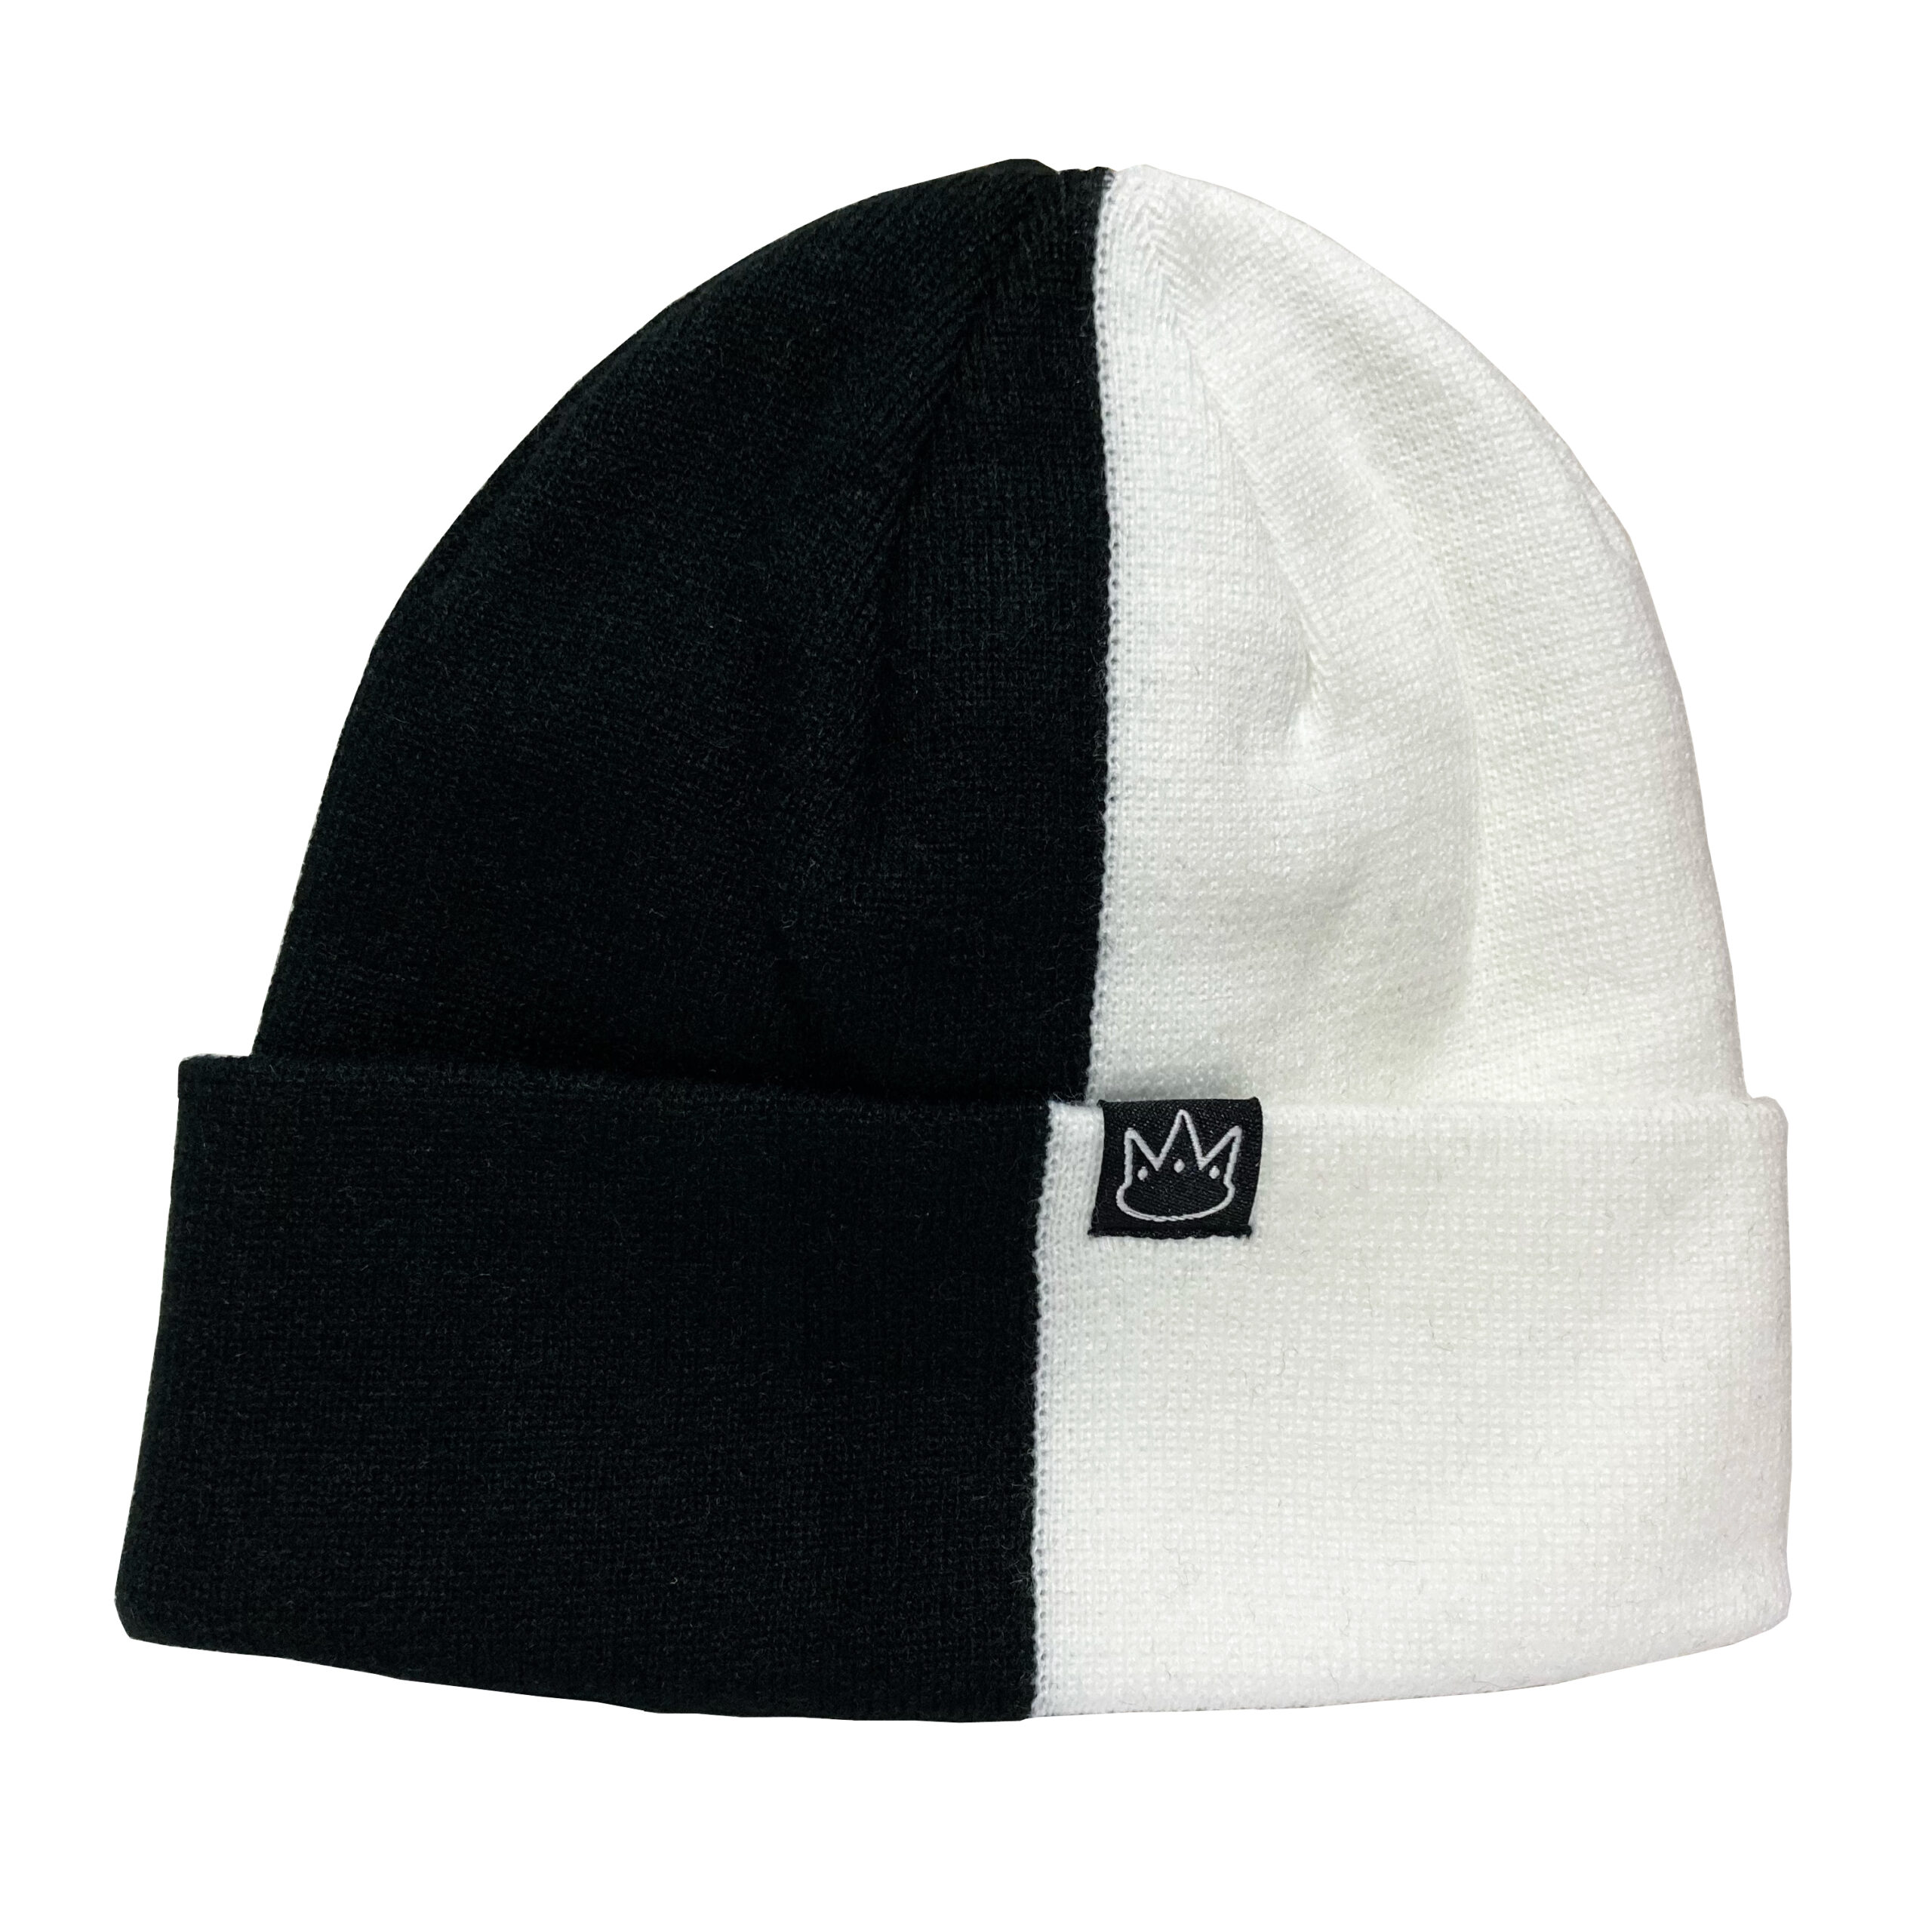 half black white beanie hat cap